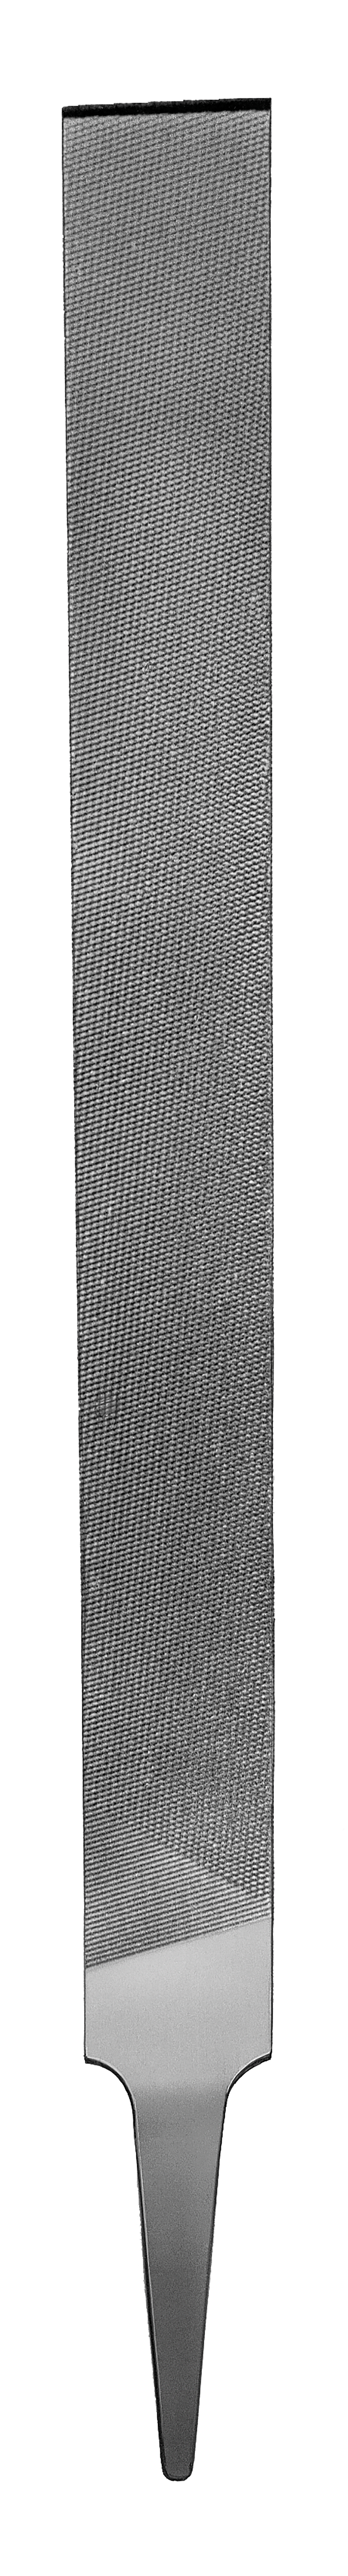 Foto of  Werkplaatsvijlen conform DIN 7261, vorm D, keep 2, 300 mm 